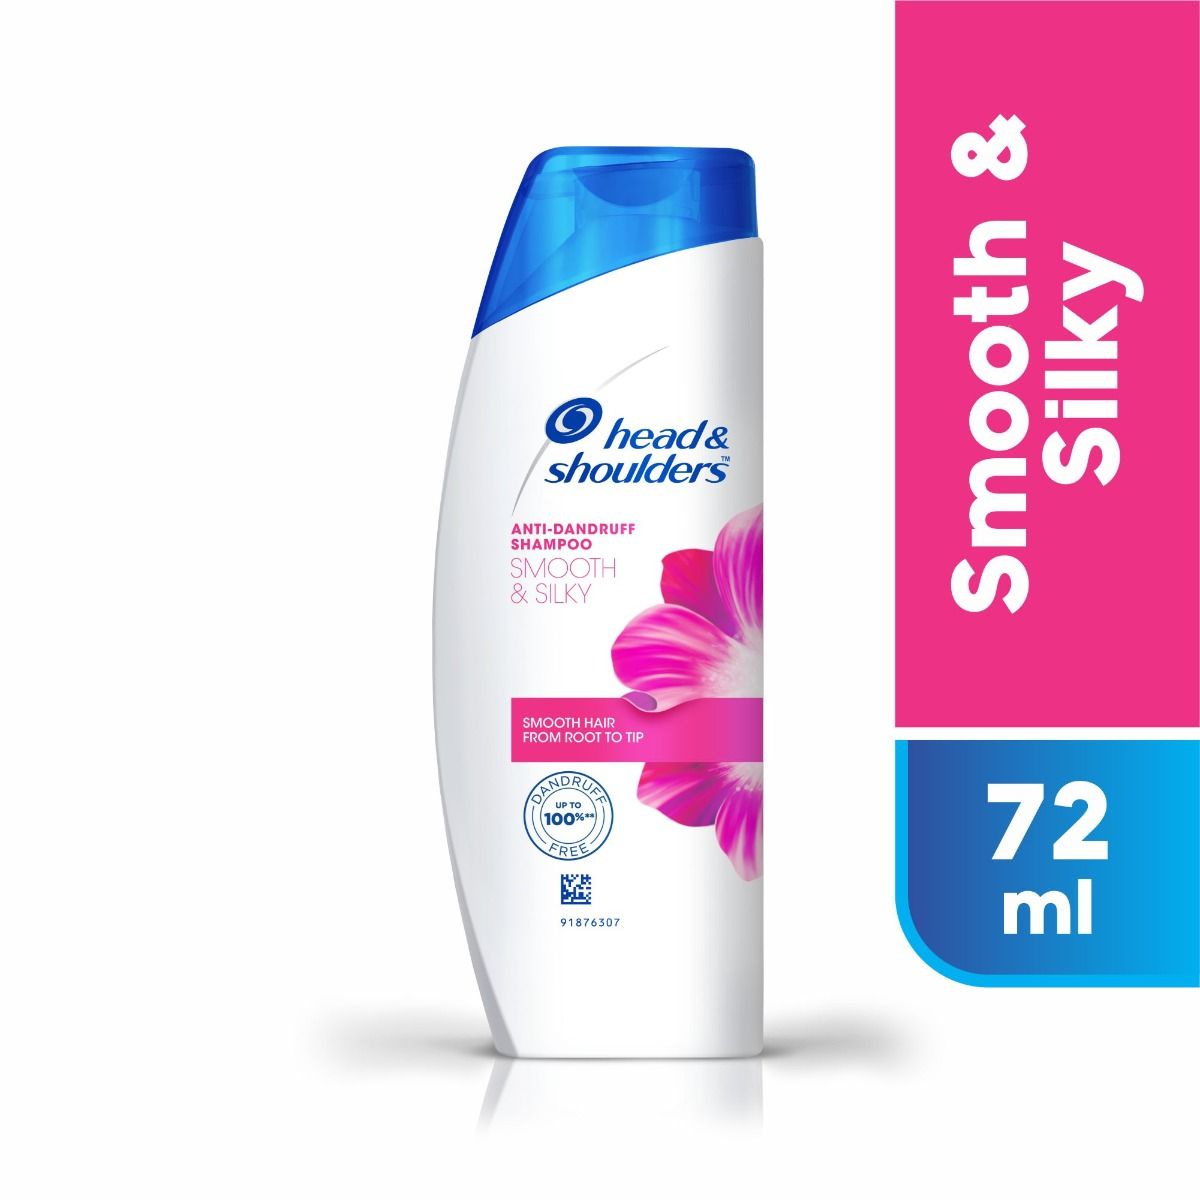 Head & Shoulders Anti-Dandruff Smooth & Silky Shampoo, 72ml, Pack of 1 